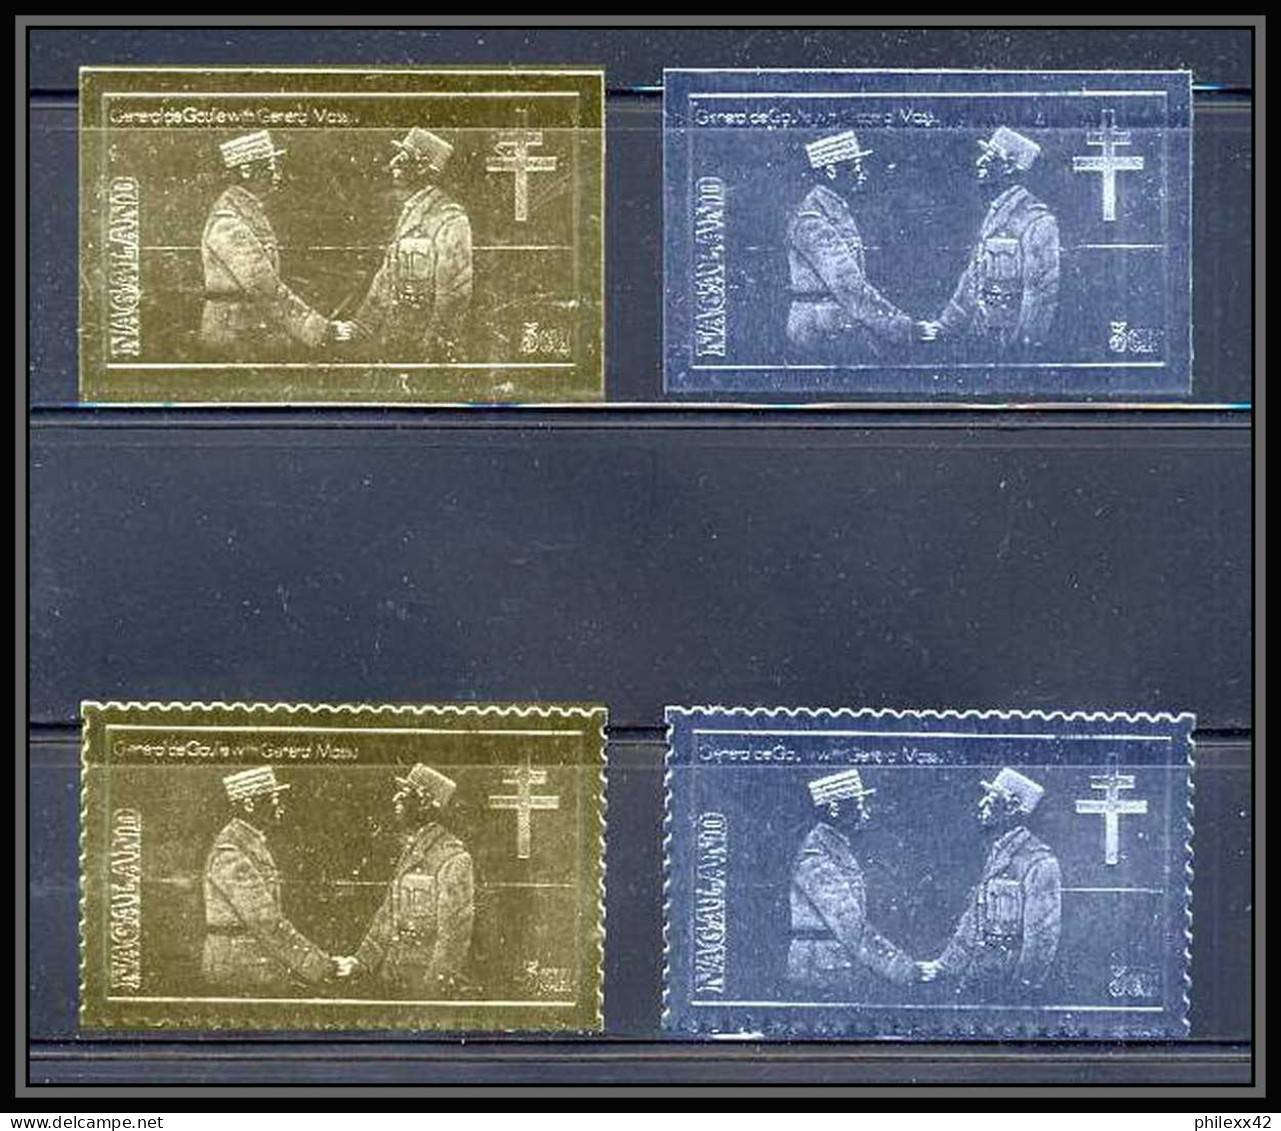 174a Charles De Gaulle - Jacques Massu - Inde (India) 4 Timbres Série Complète Argent (Silver) OR (gold Stamps)  - Emissione Locali